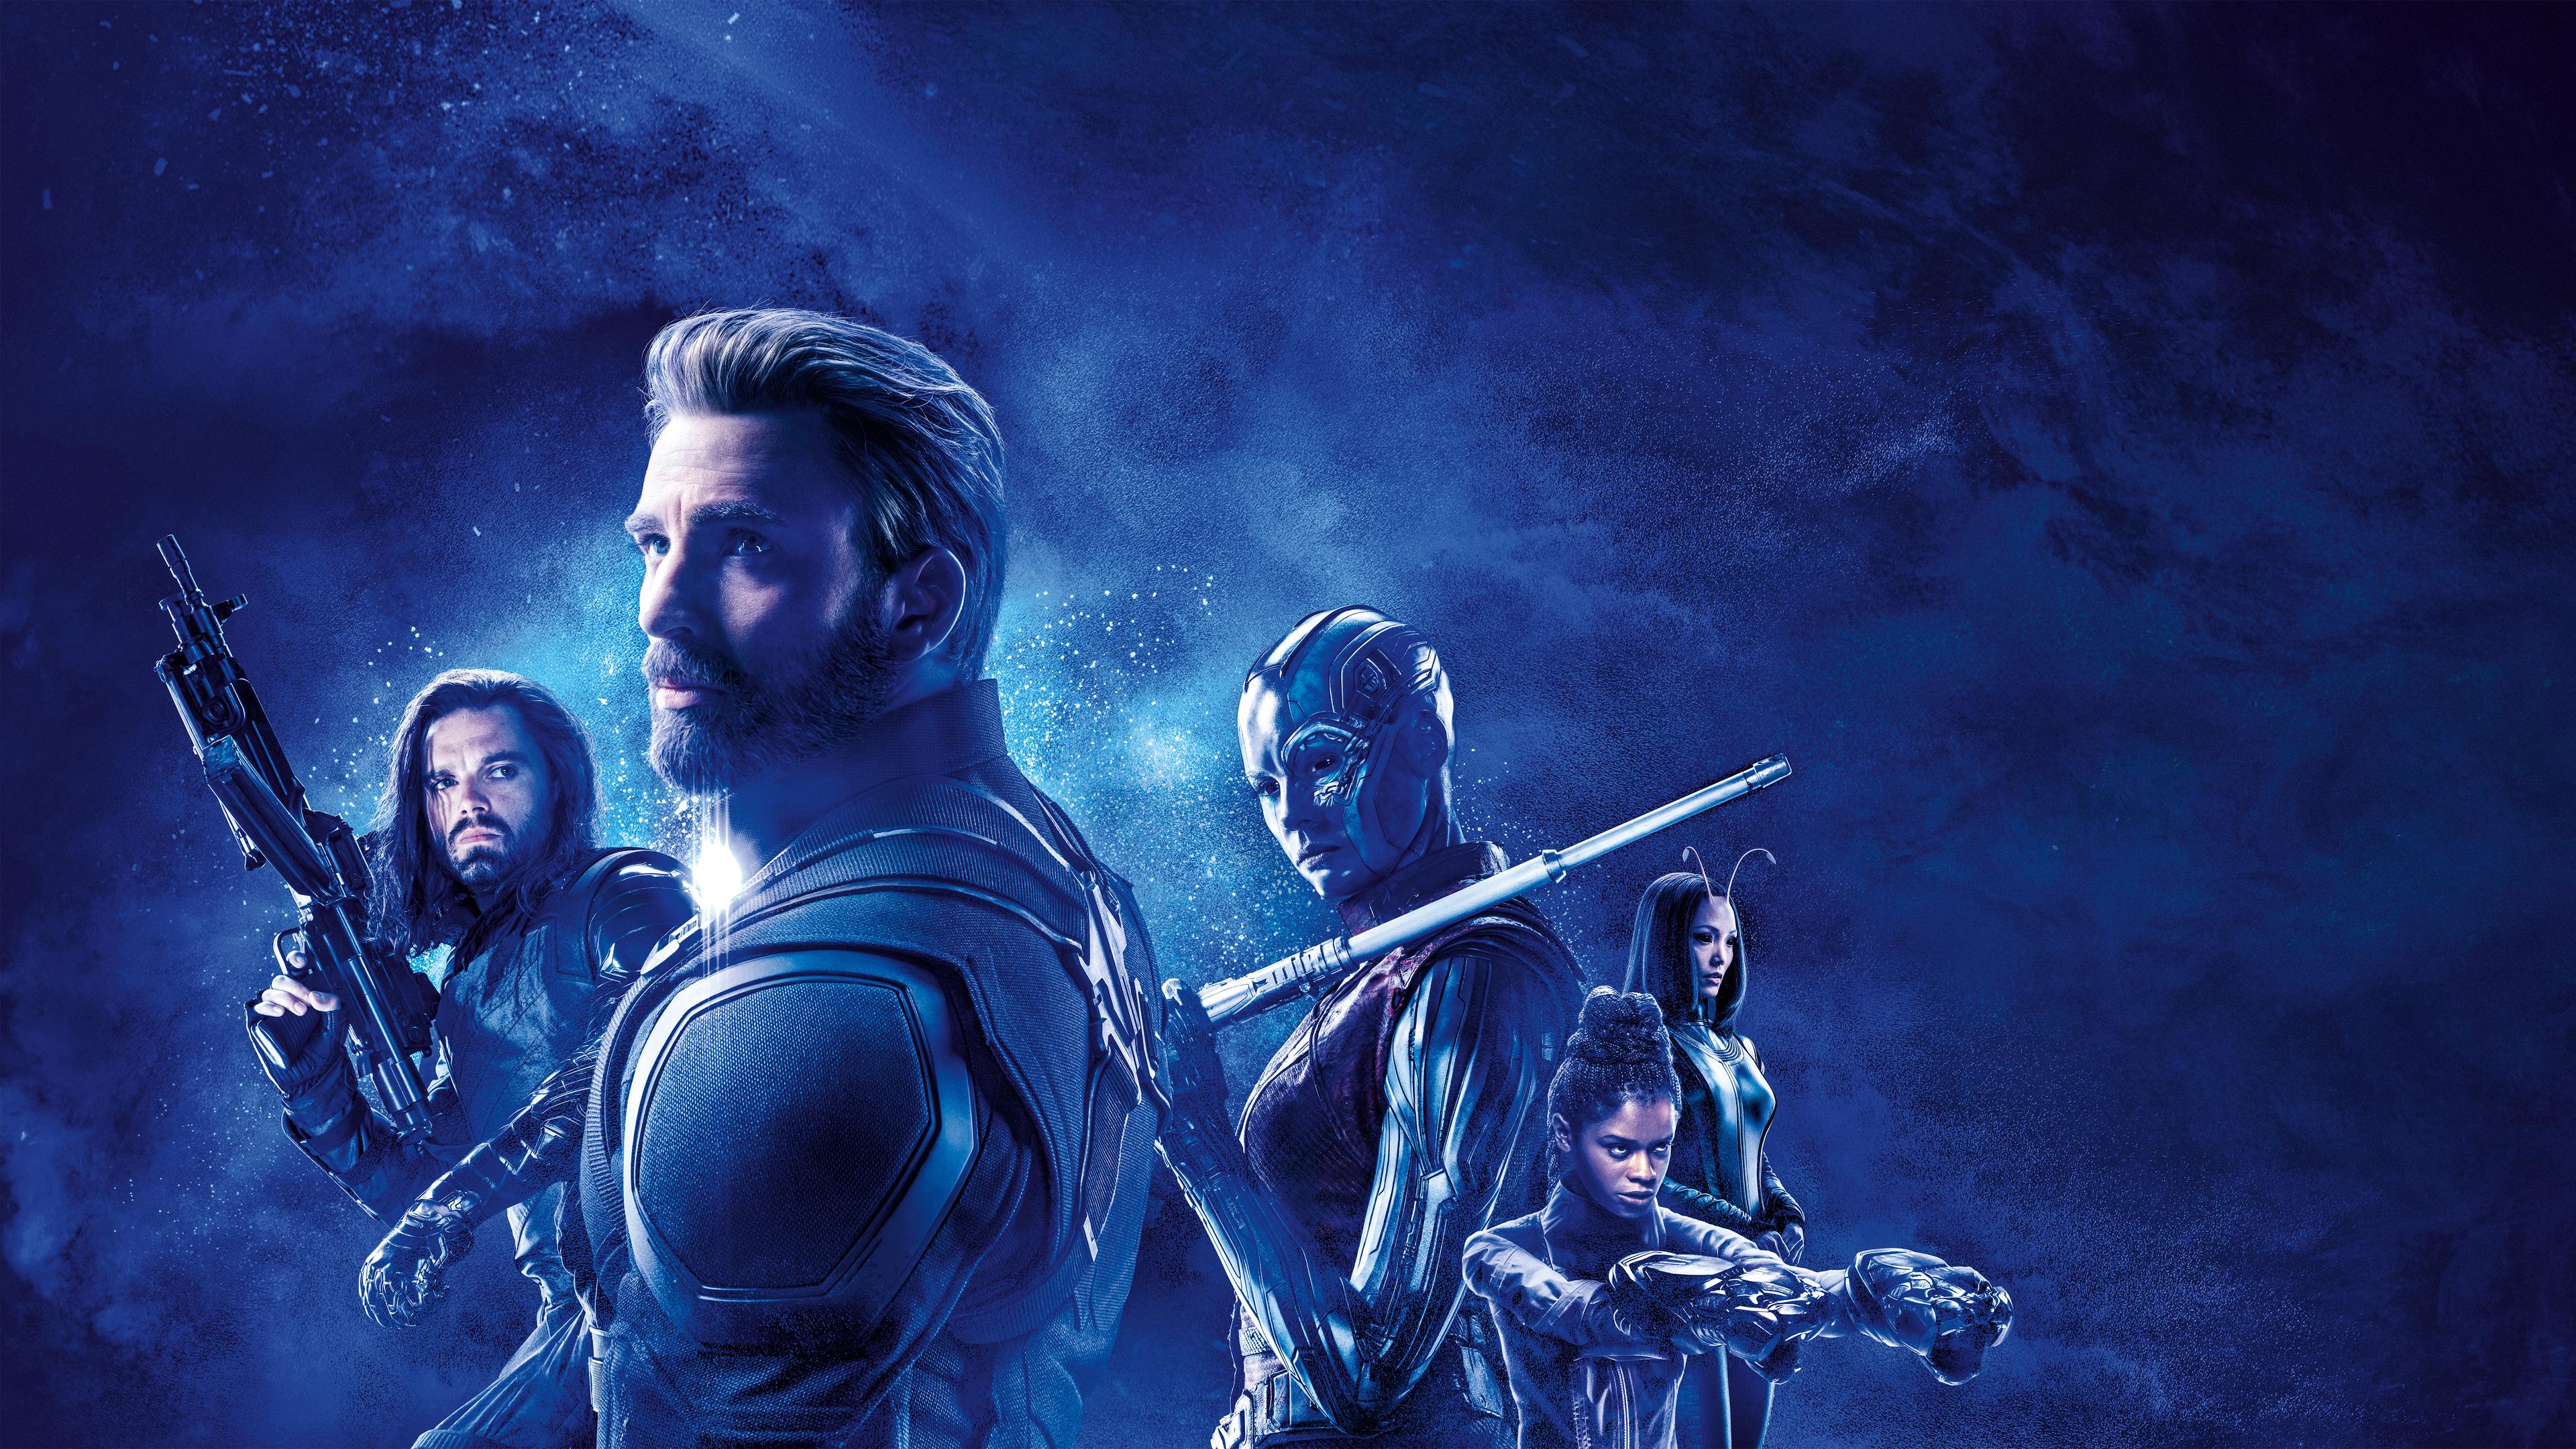 Wallpaper 4k Avengers Infinity War Space Stone 4k 2018 Movies